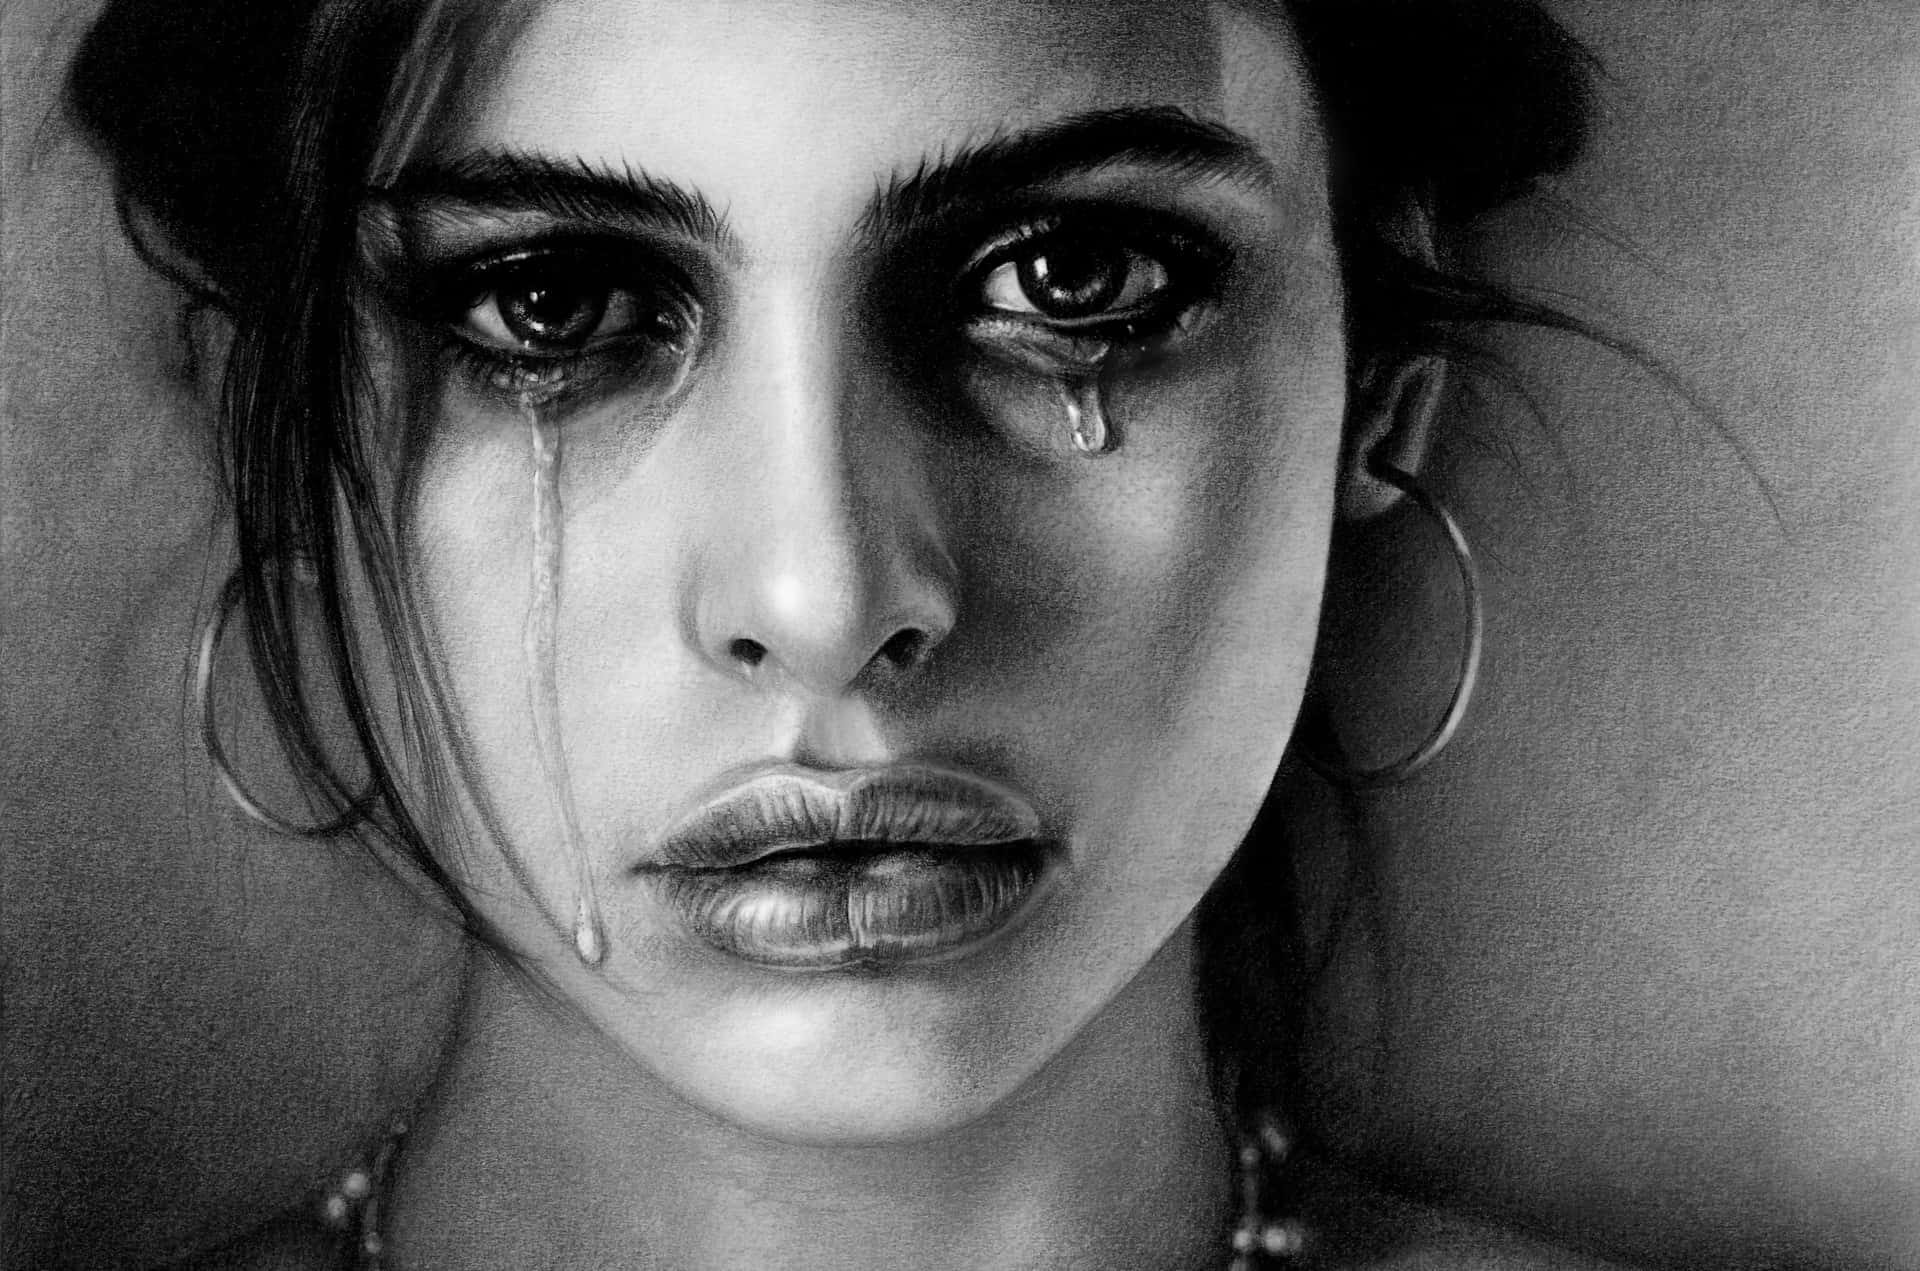 BBC - Blast Art & Design - Drawing of a Crying Girl